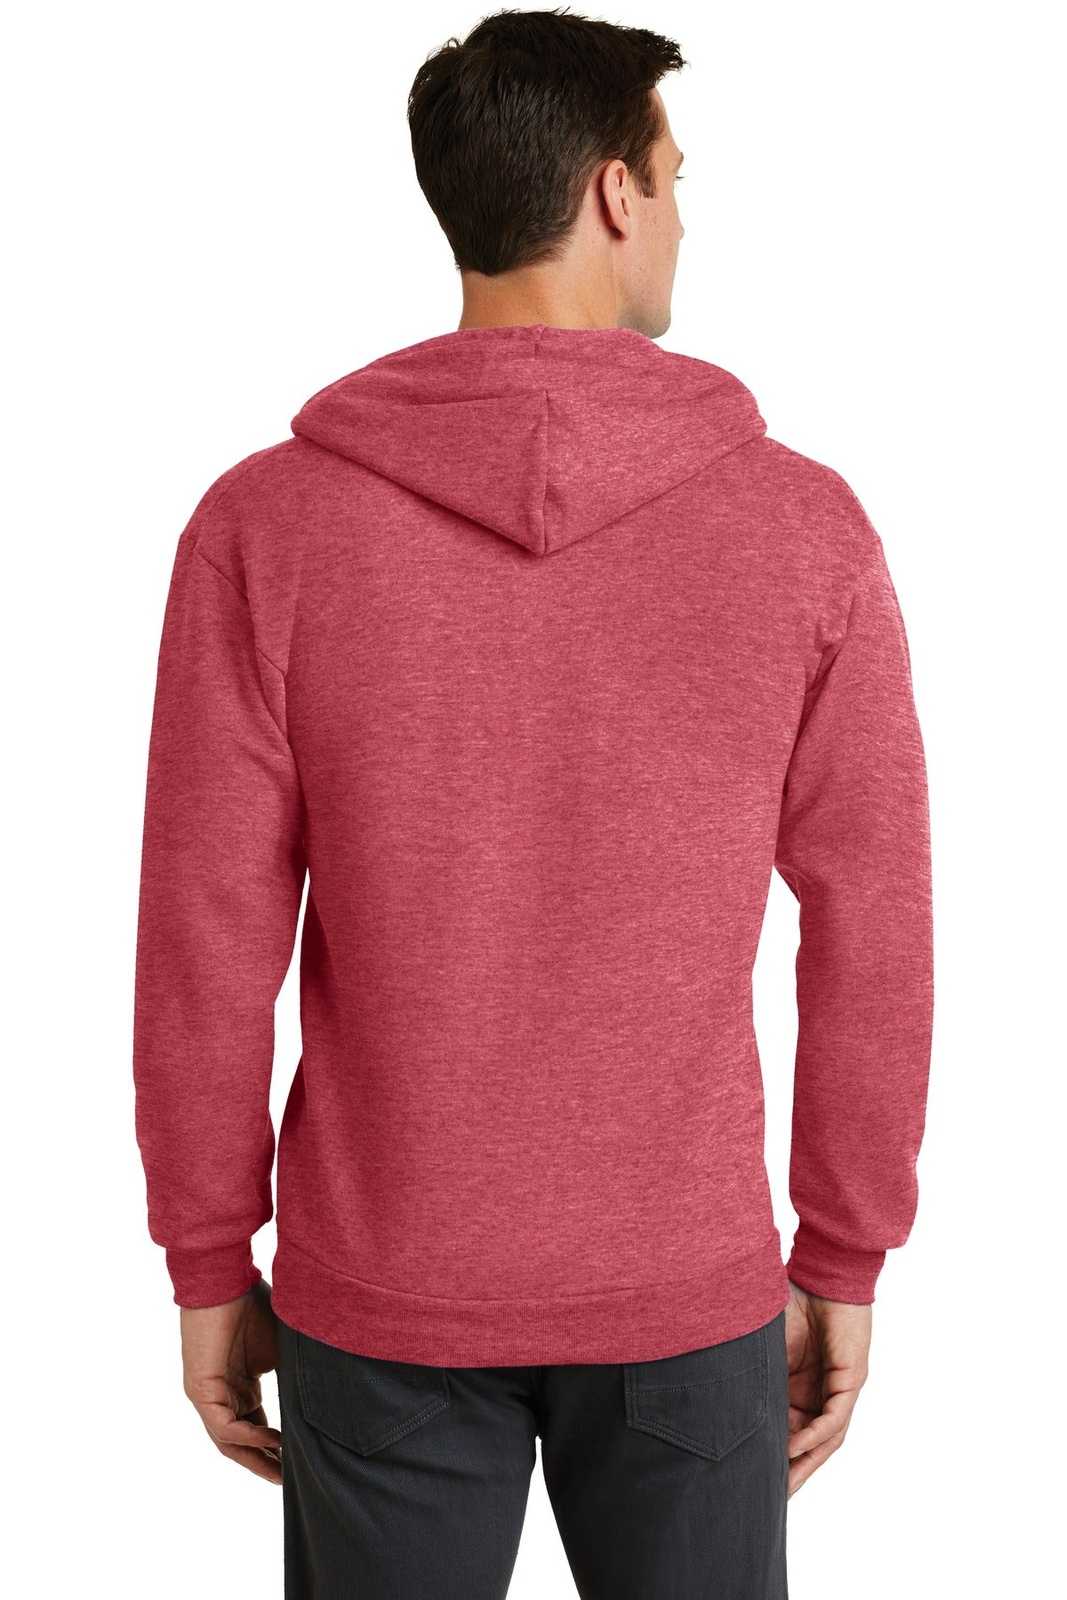 Port & Company PC78ZH Core Fleece Full-Zip Hooded Sweatshirt - Heather Red - HIT a Double - 1